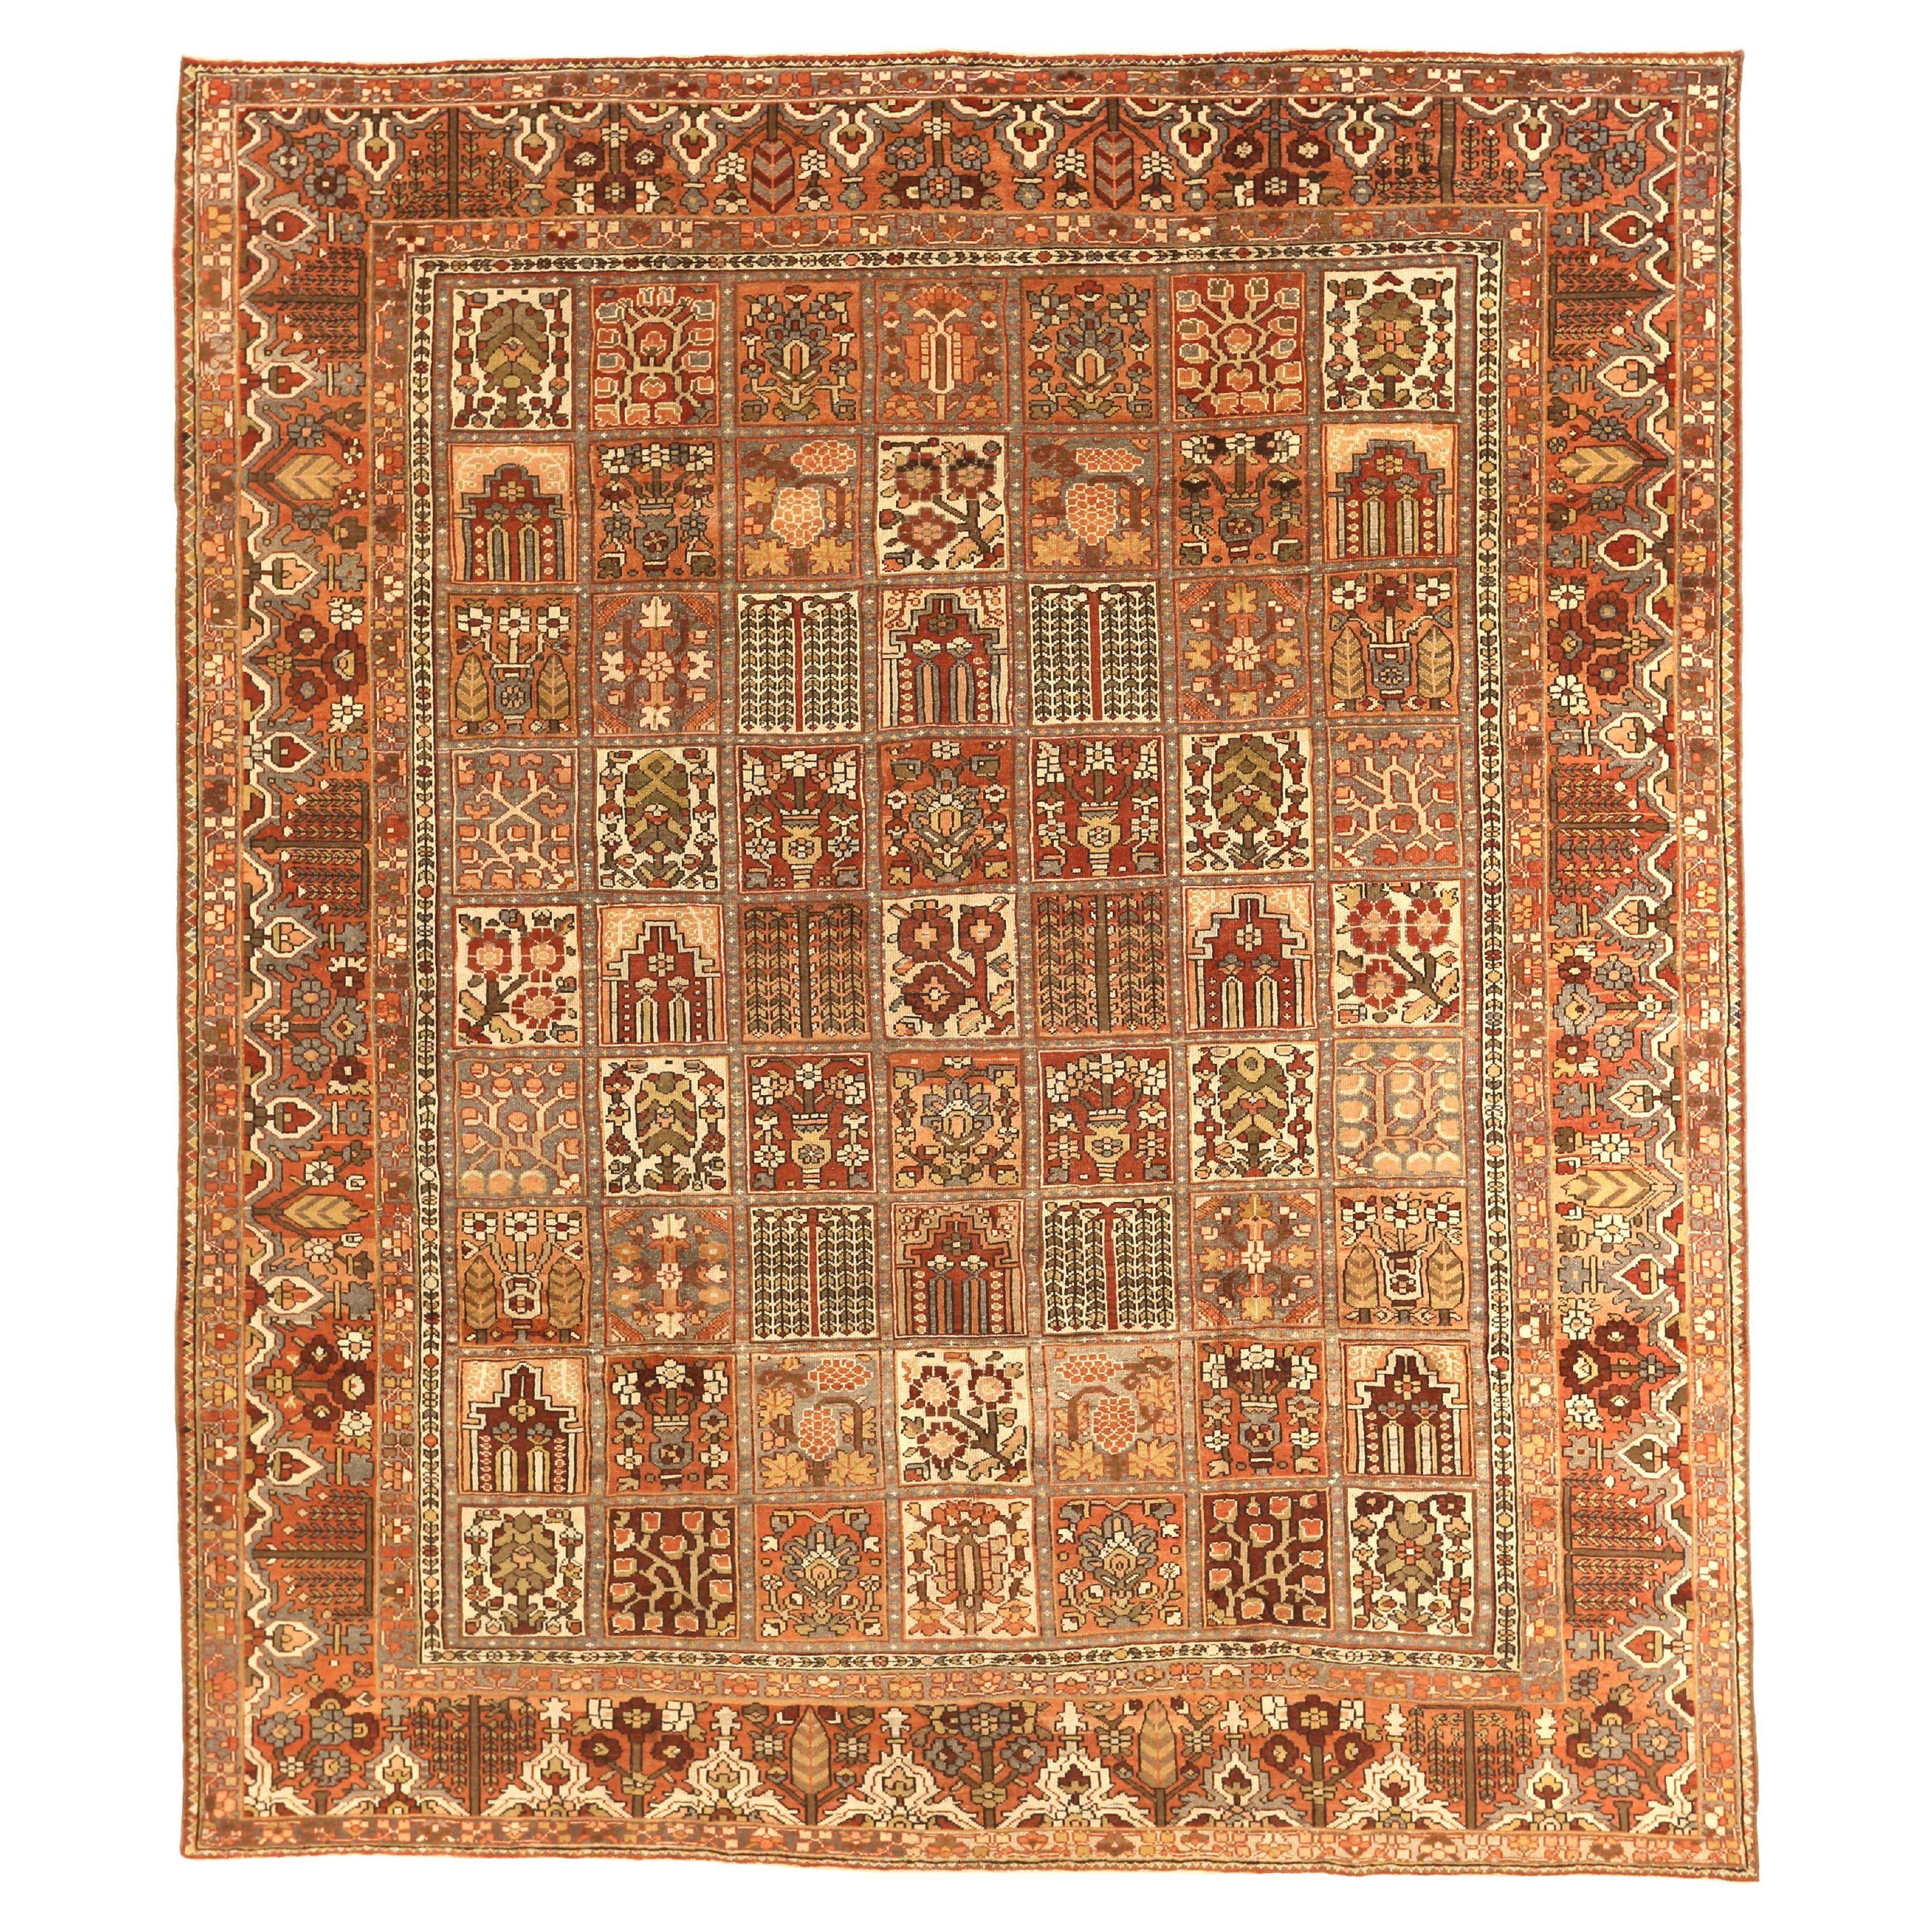 Antique Handmade Persian Tribal Rug Bakhtiari Design For Sale